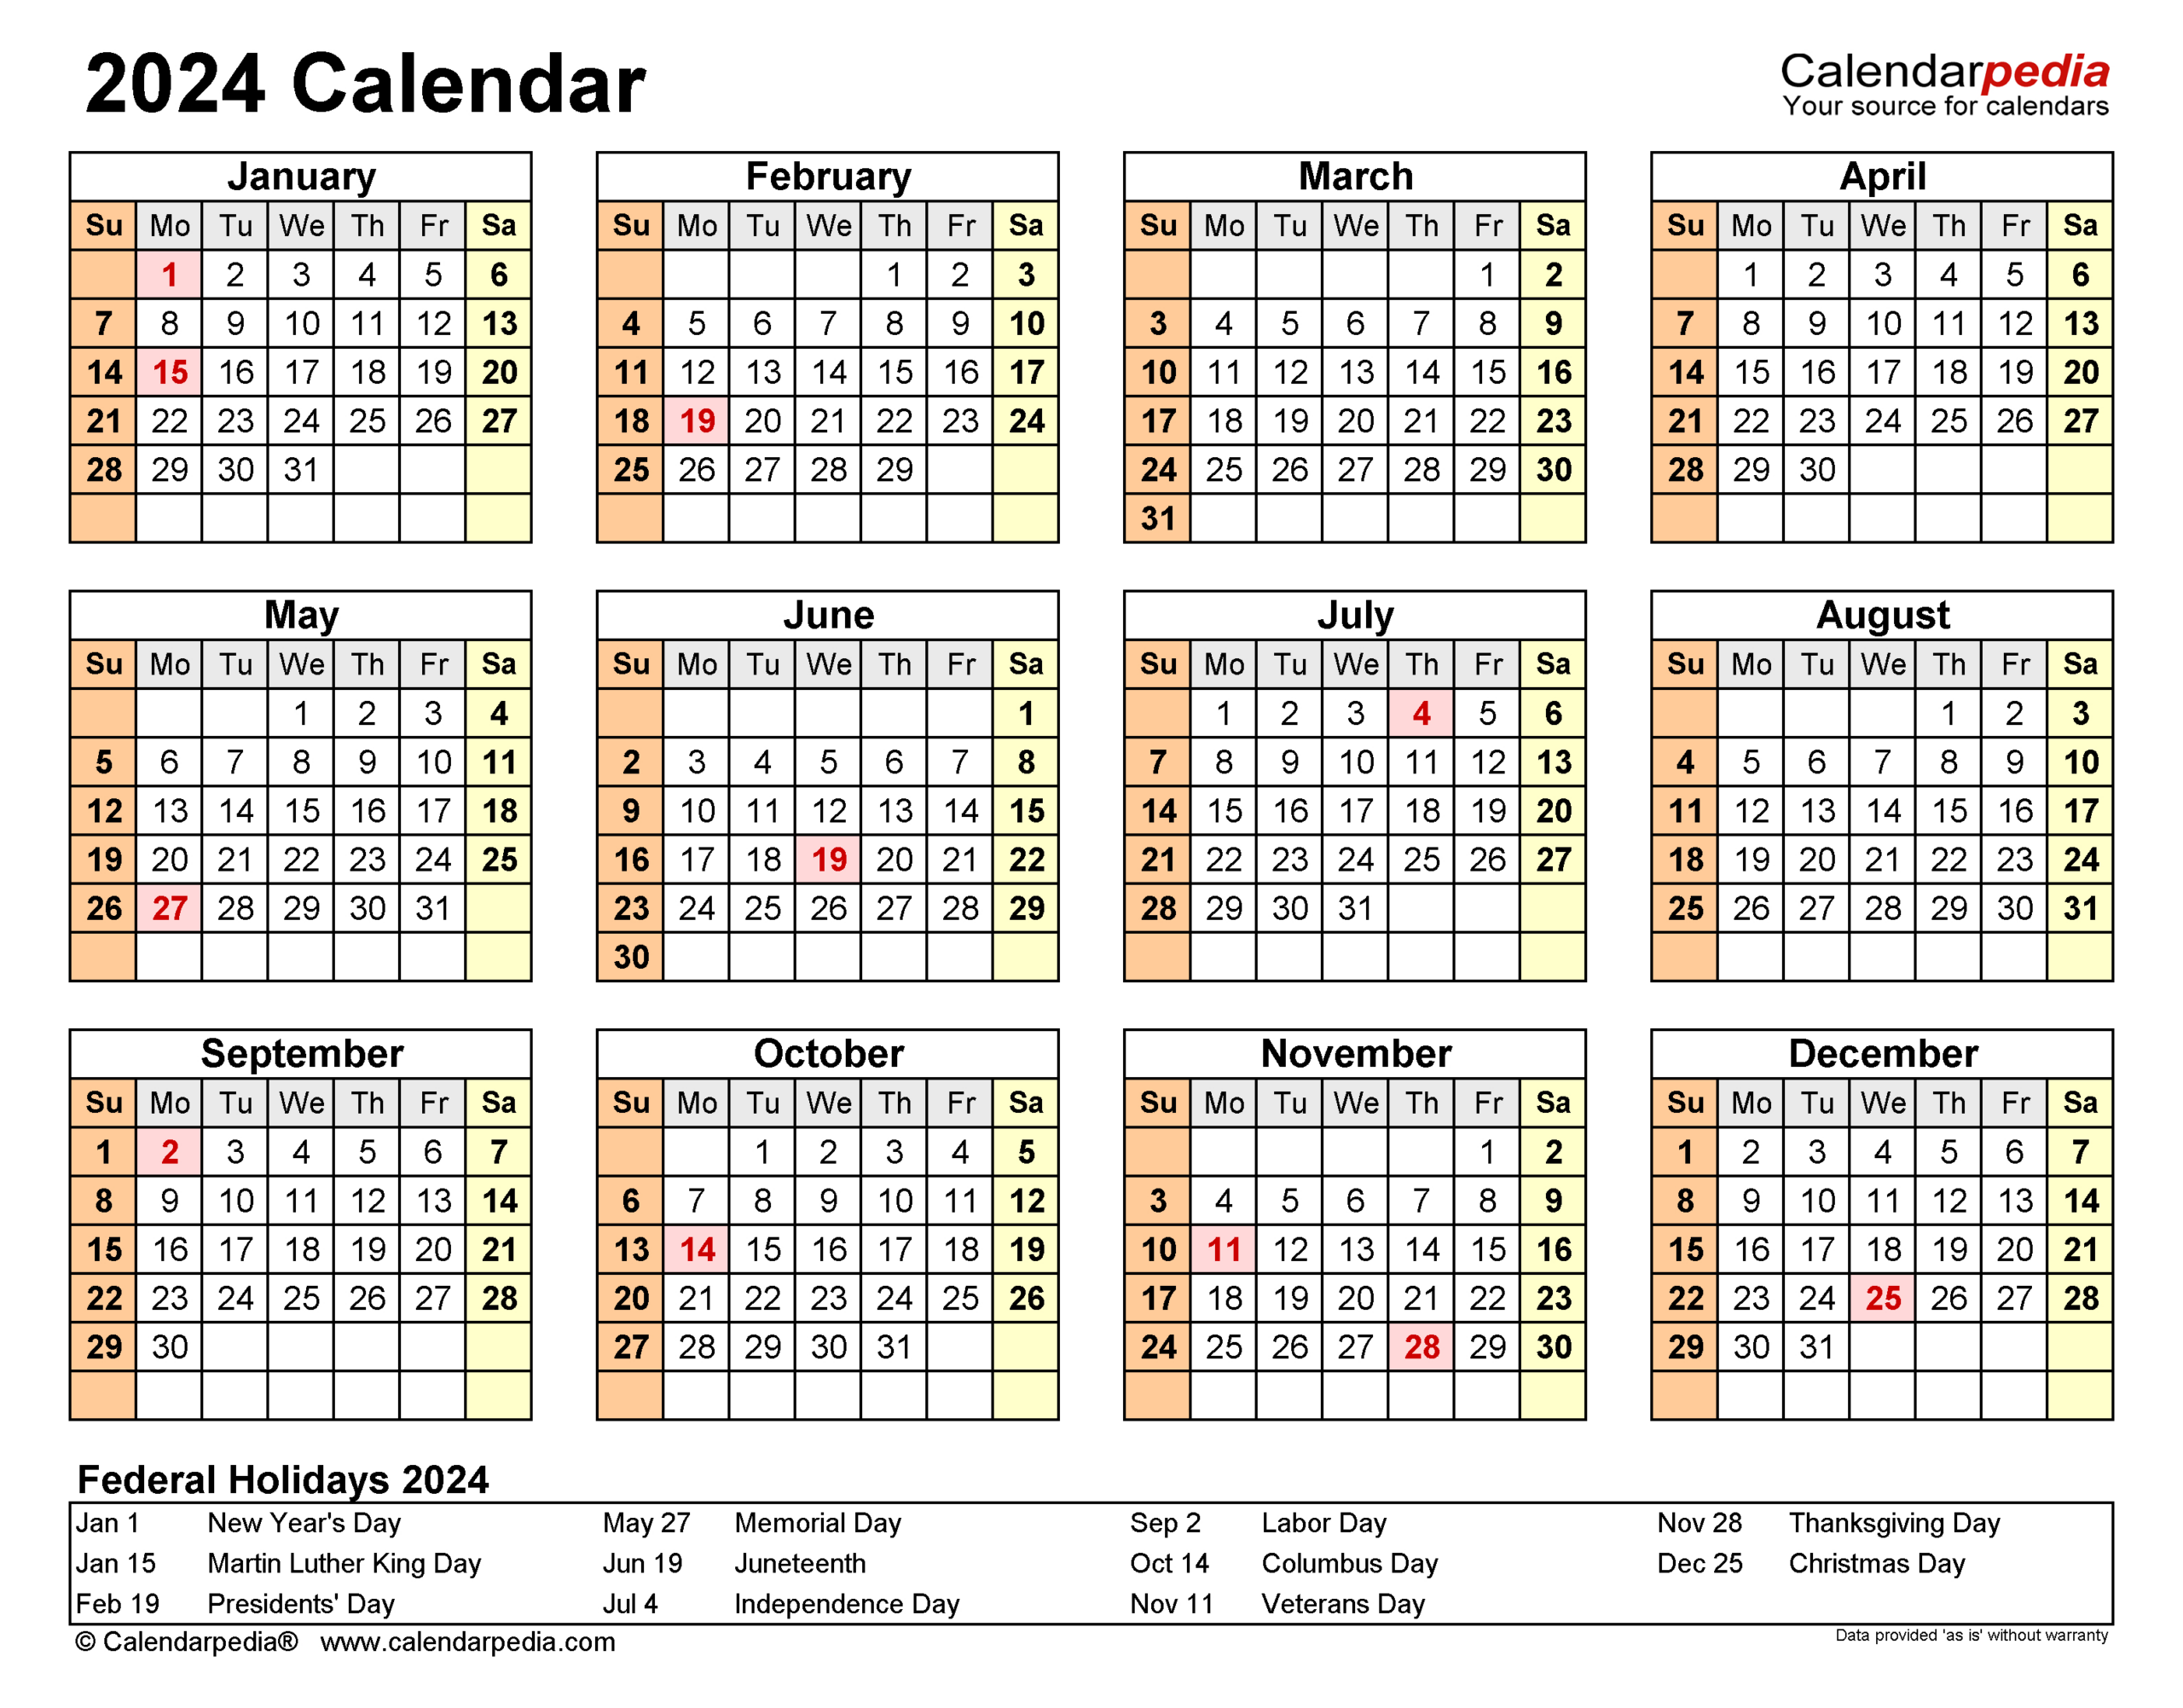 2024 Calendar - Free Printable Excel Templates - Calendarpedia | Printable Calendar 2024 South Africa Free Download